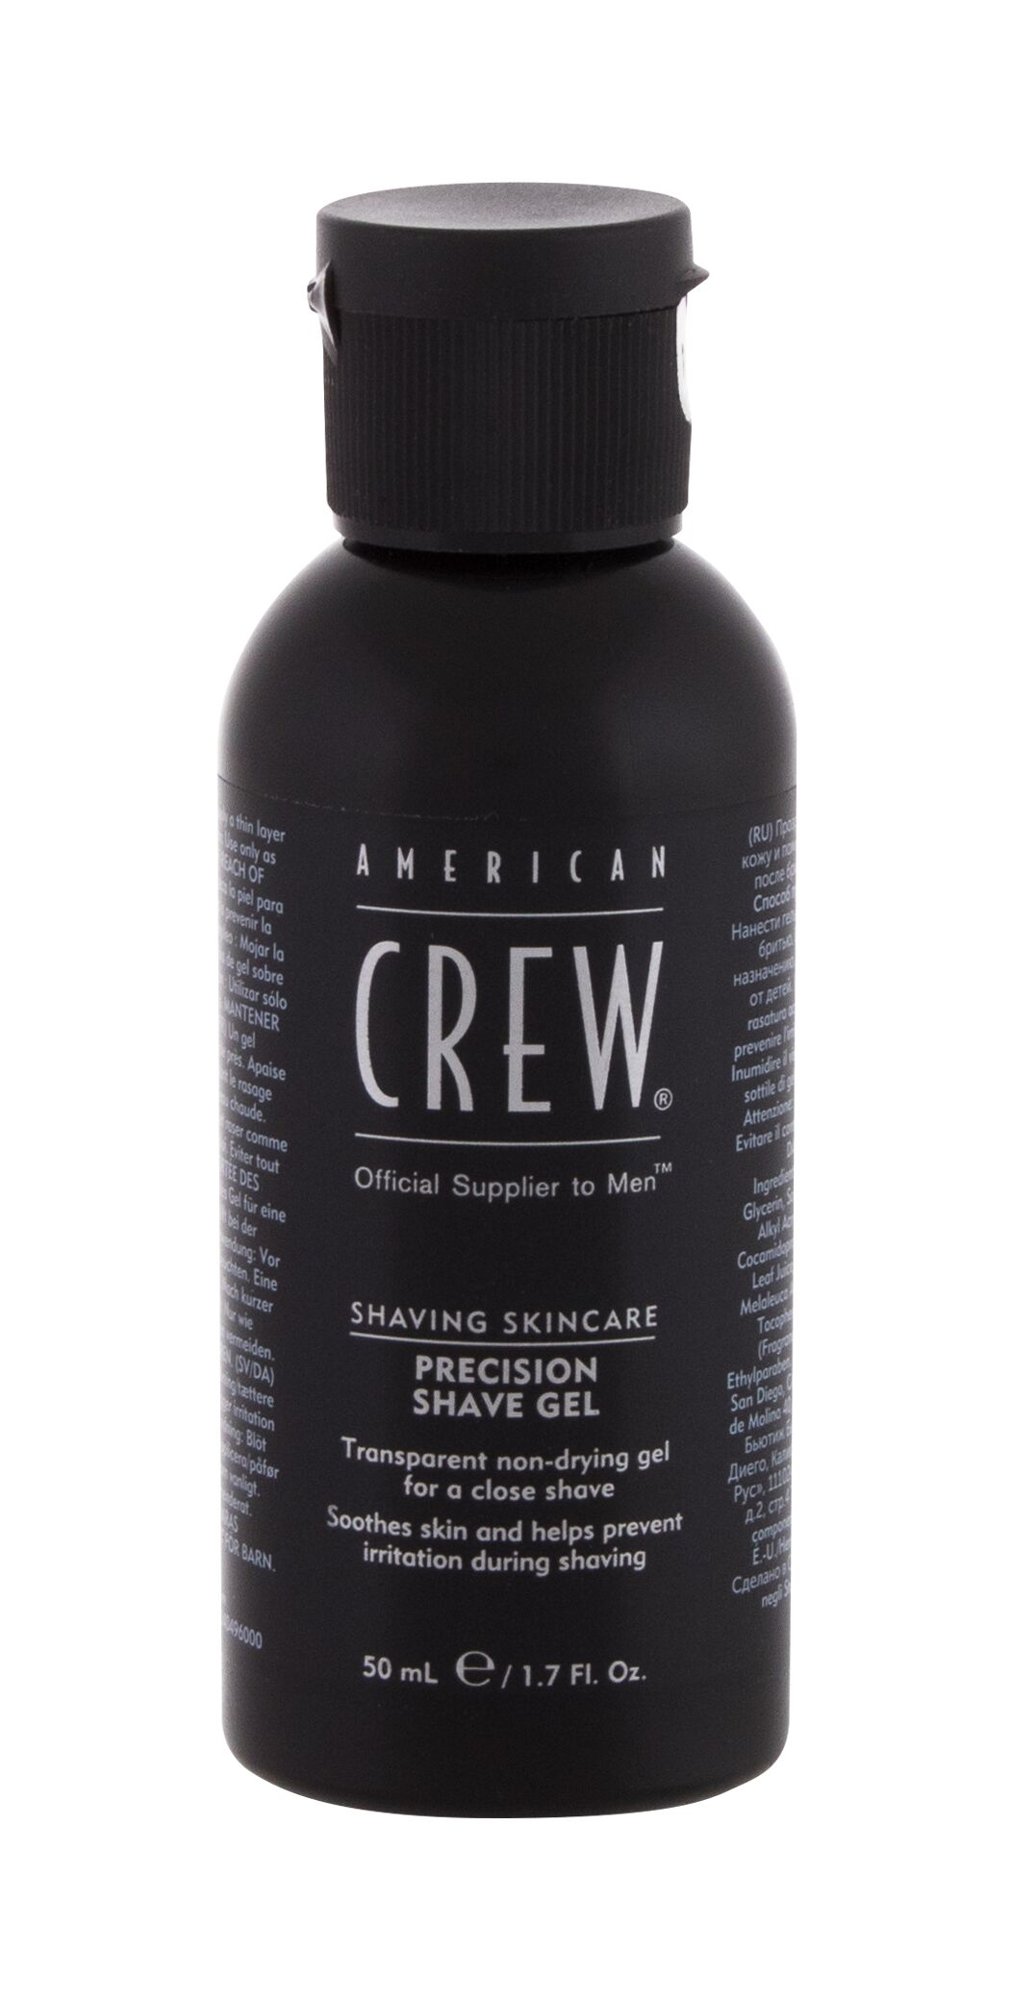 American Crew Shaving Skincare Precision Shave Gel skutimosi gelis